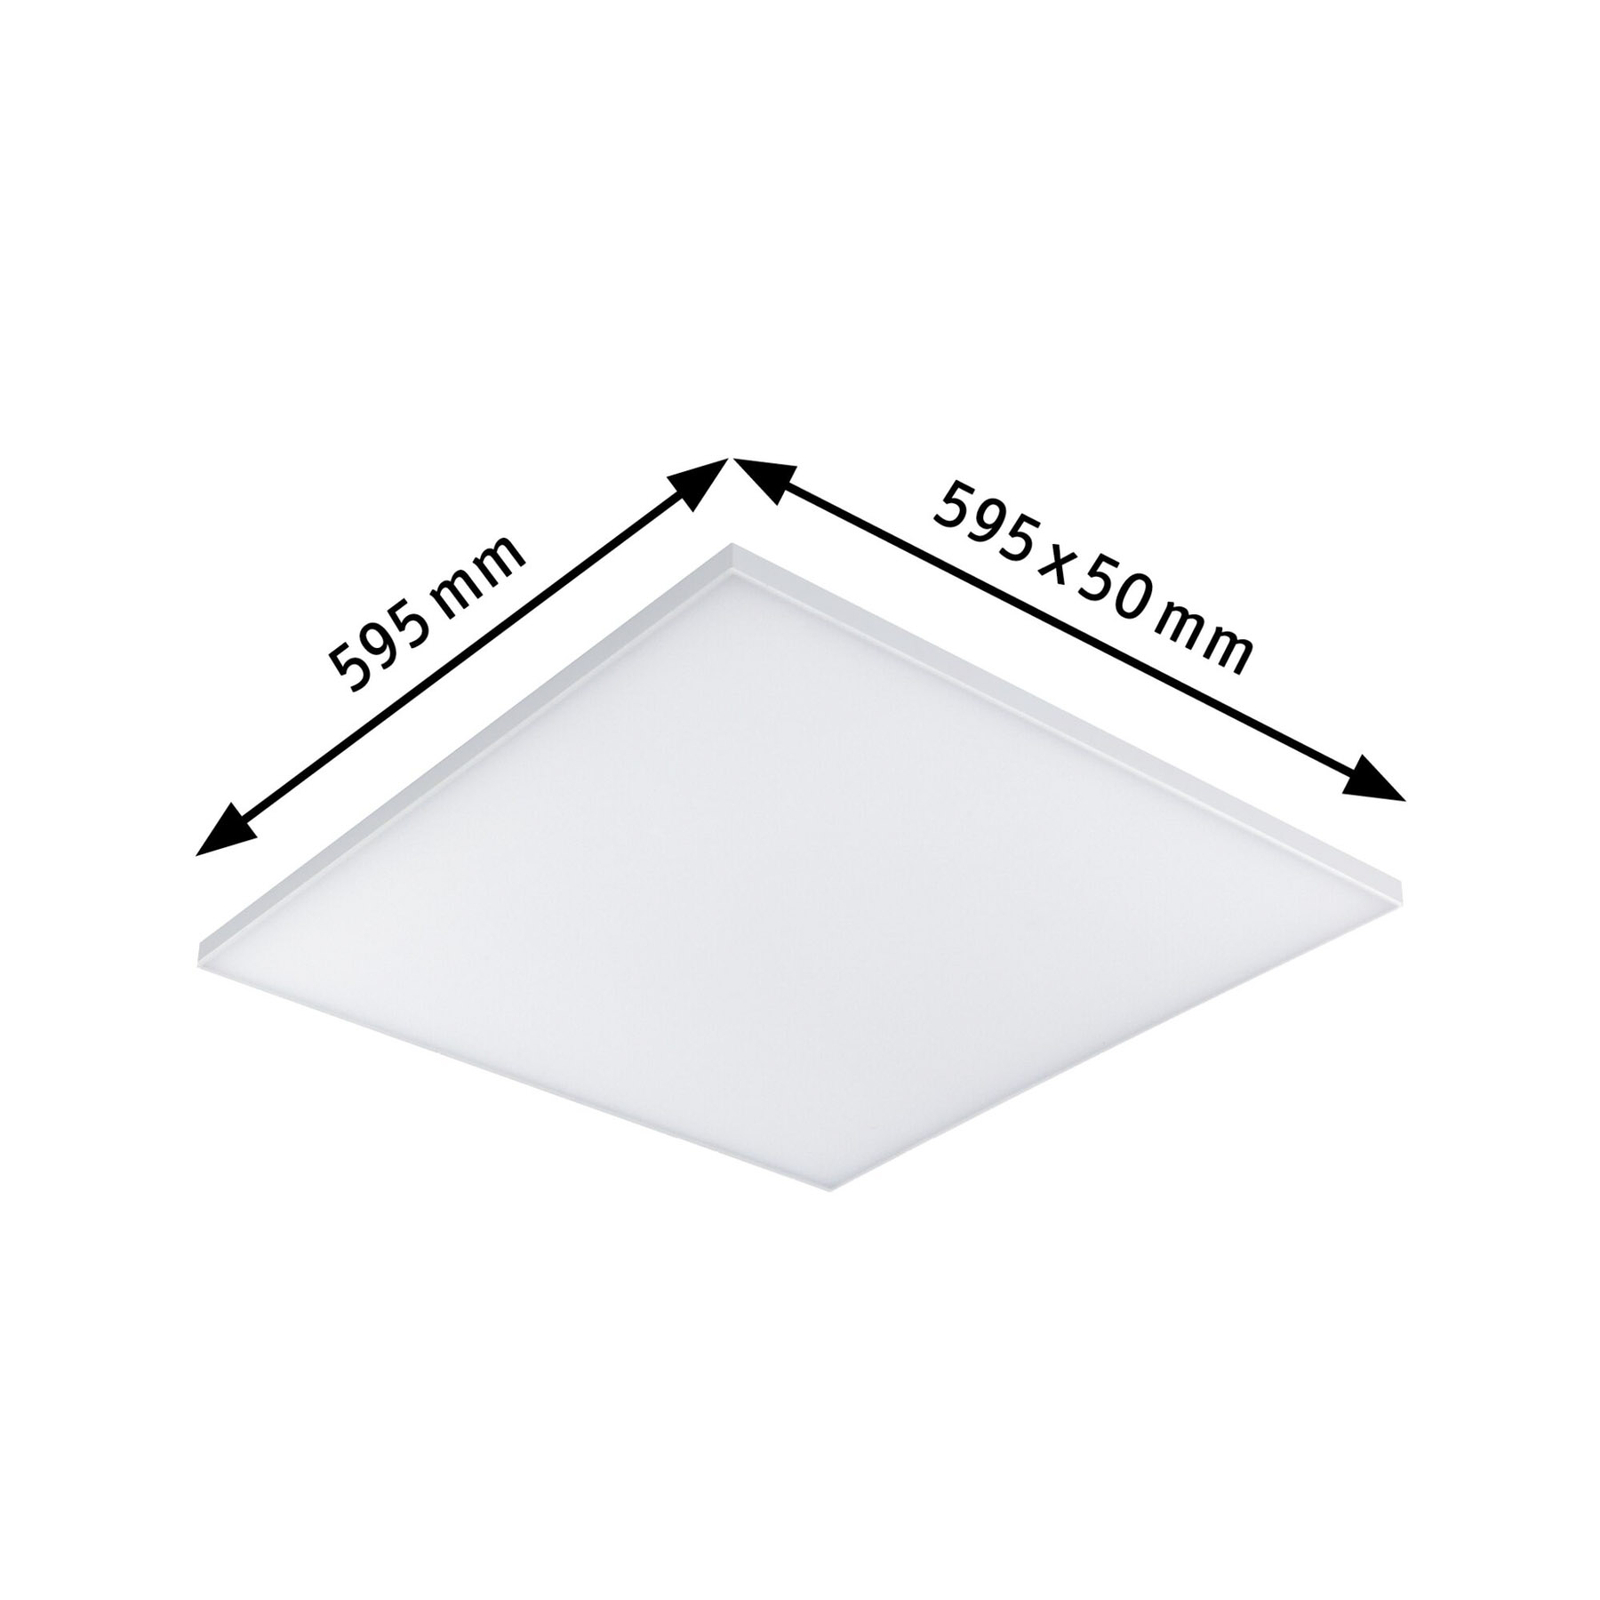 Paulmann Velora LED paneel 3-step-dim, 59,5x59,5cm